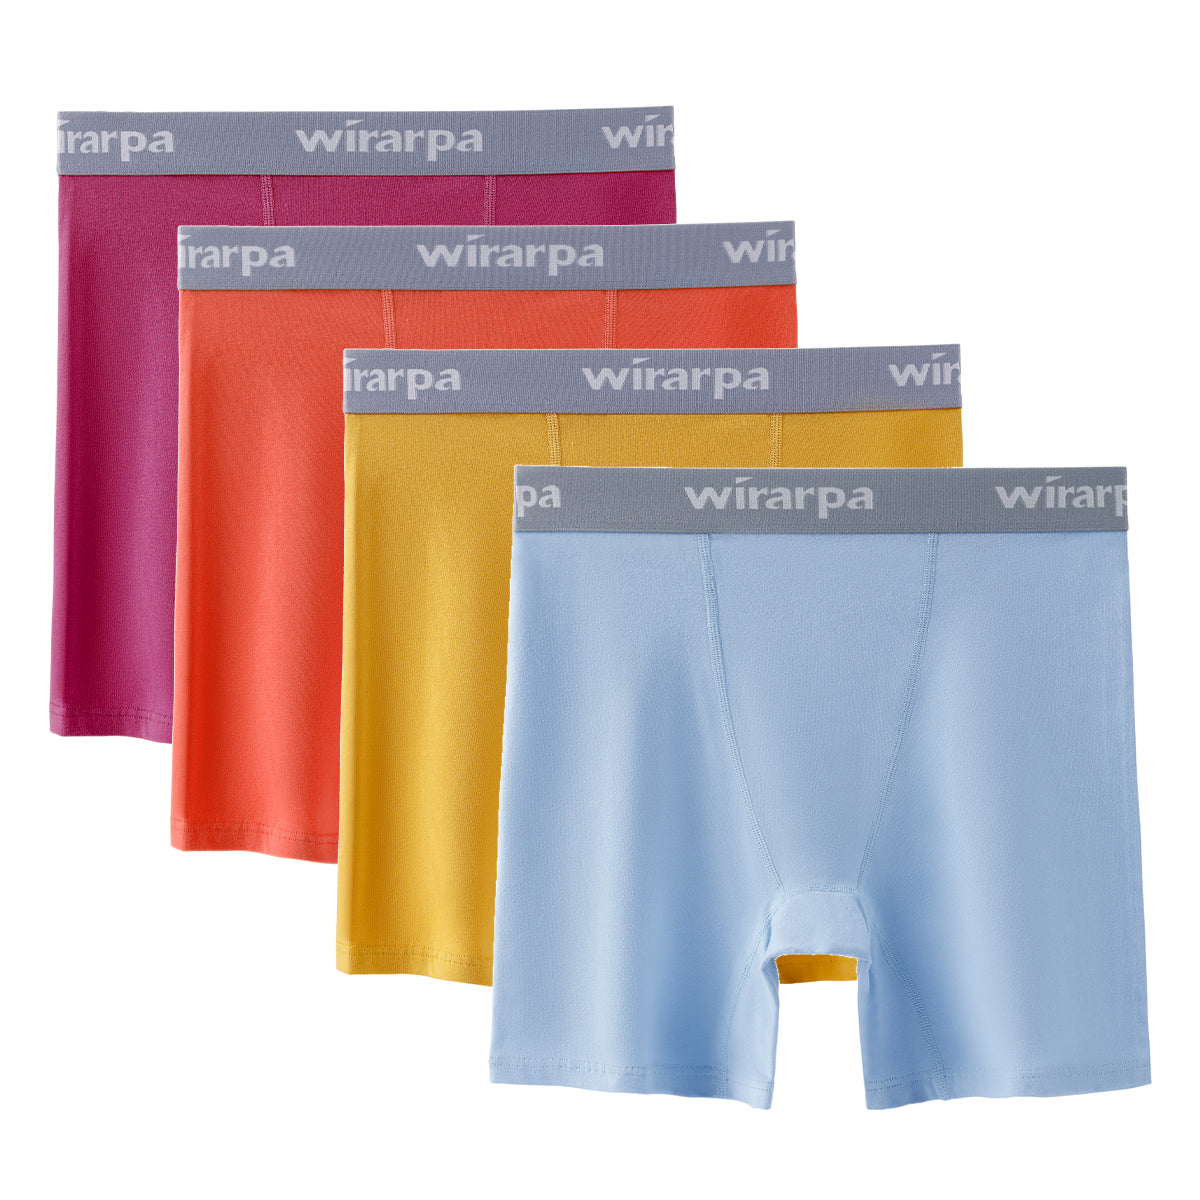 wirarpa Women's Cotton Boy Shorts Underwear Anti Chafing Soft Biker Short  Plus Boy Shorts Panties Multicolor Size 10 